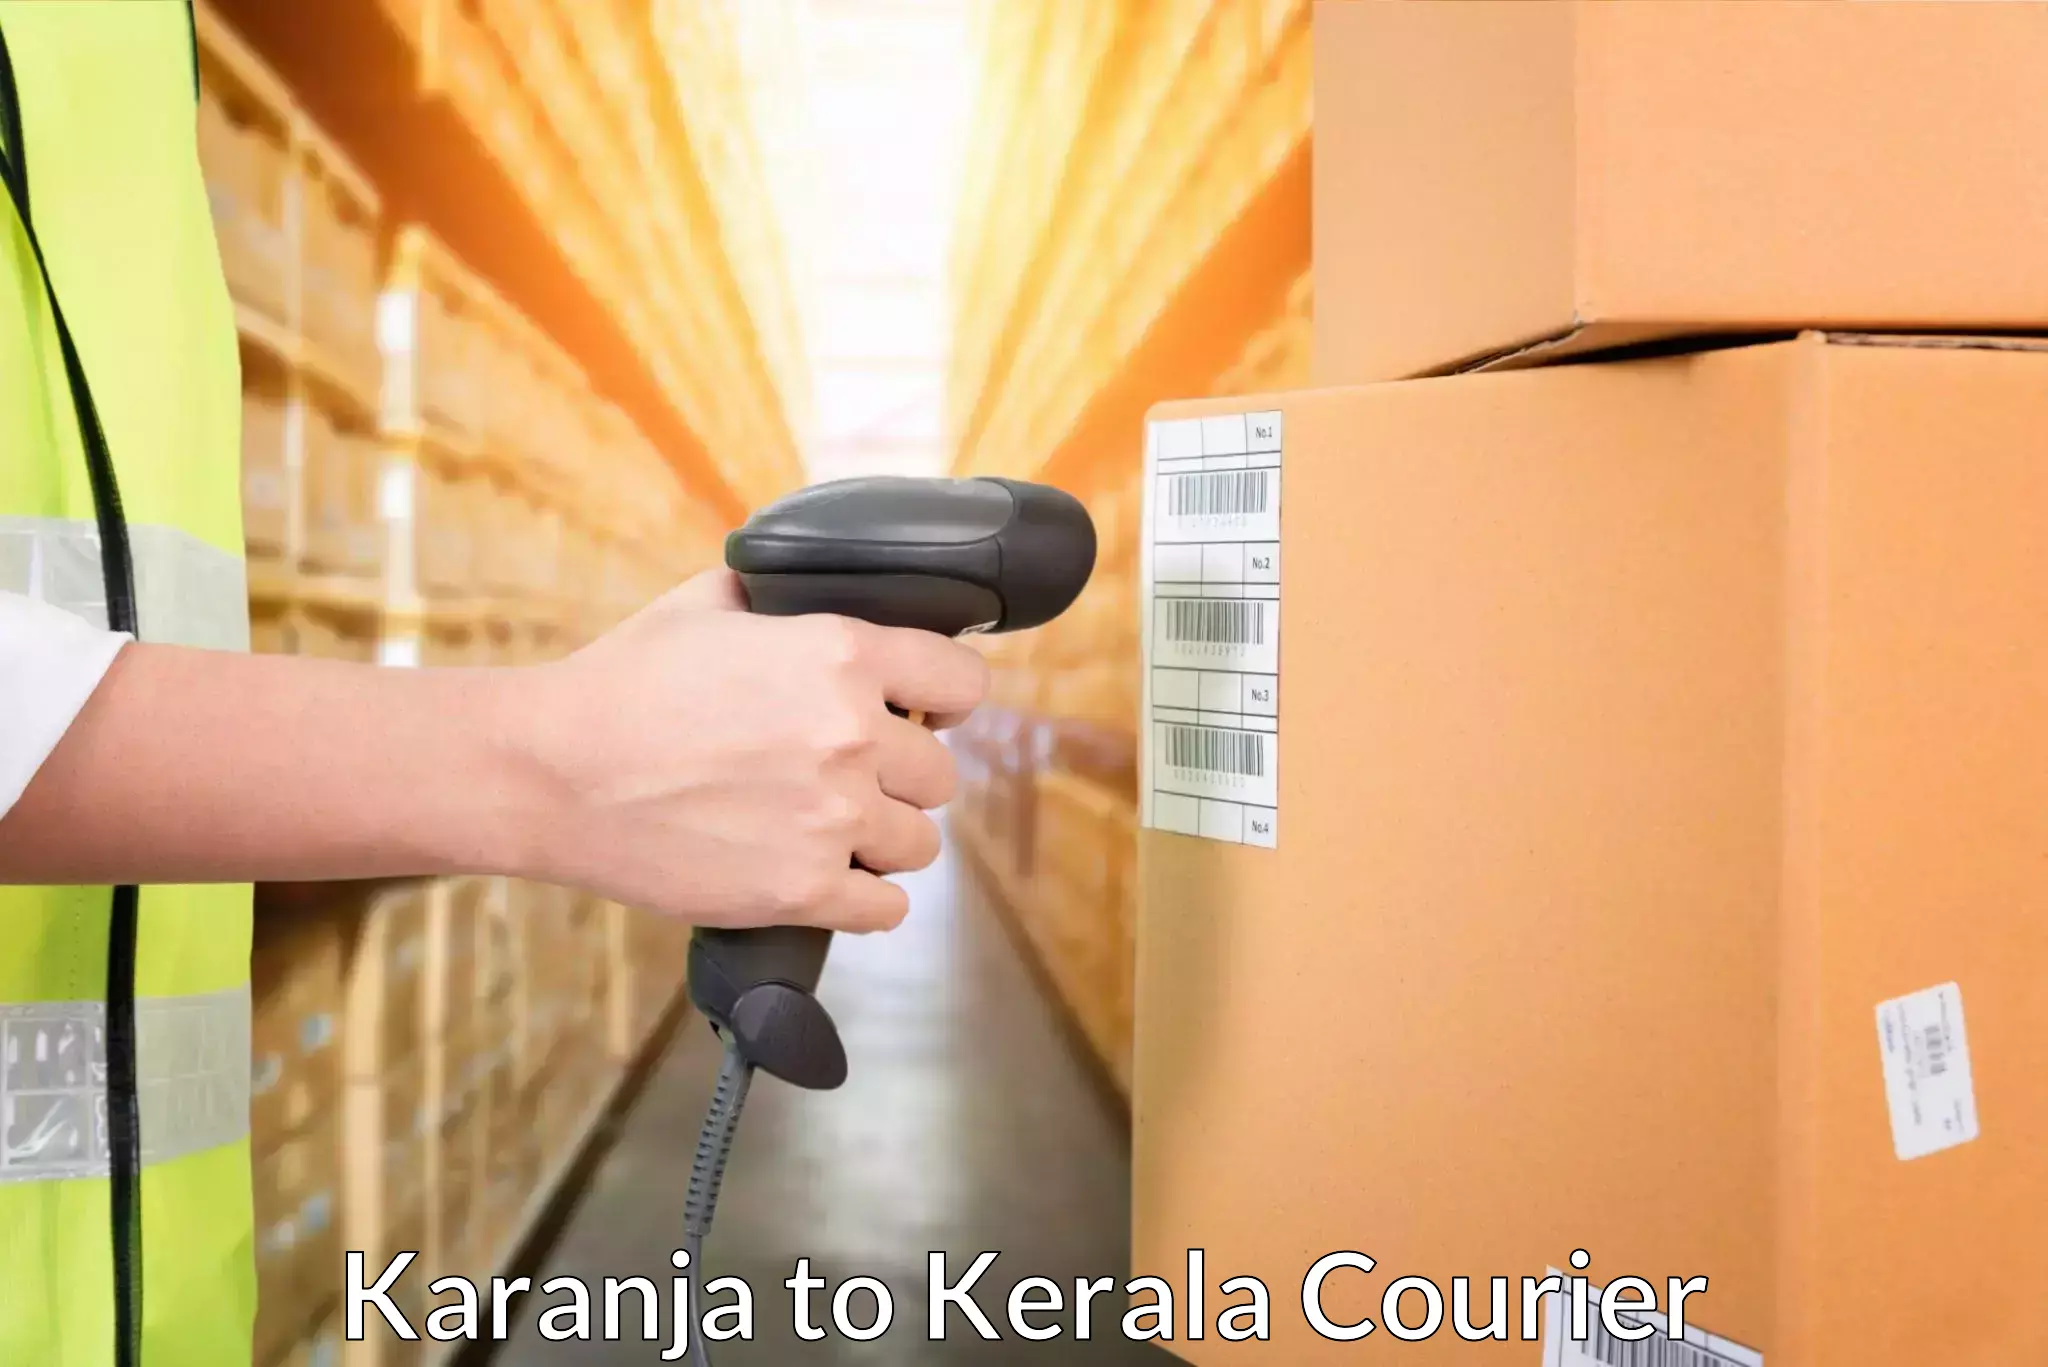 Delivery service partnership in Karanja to Kerala